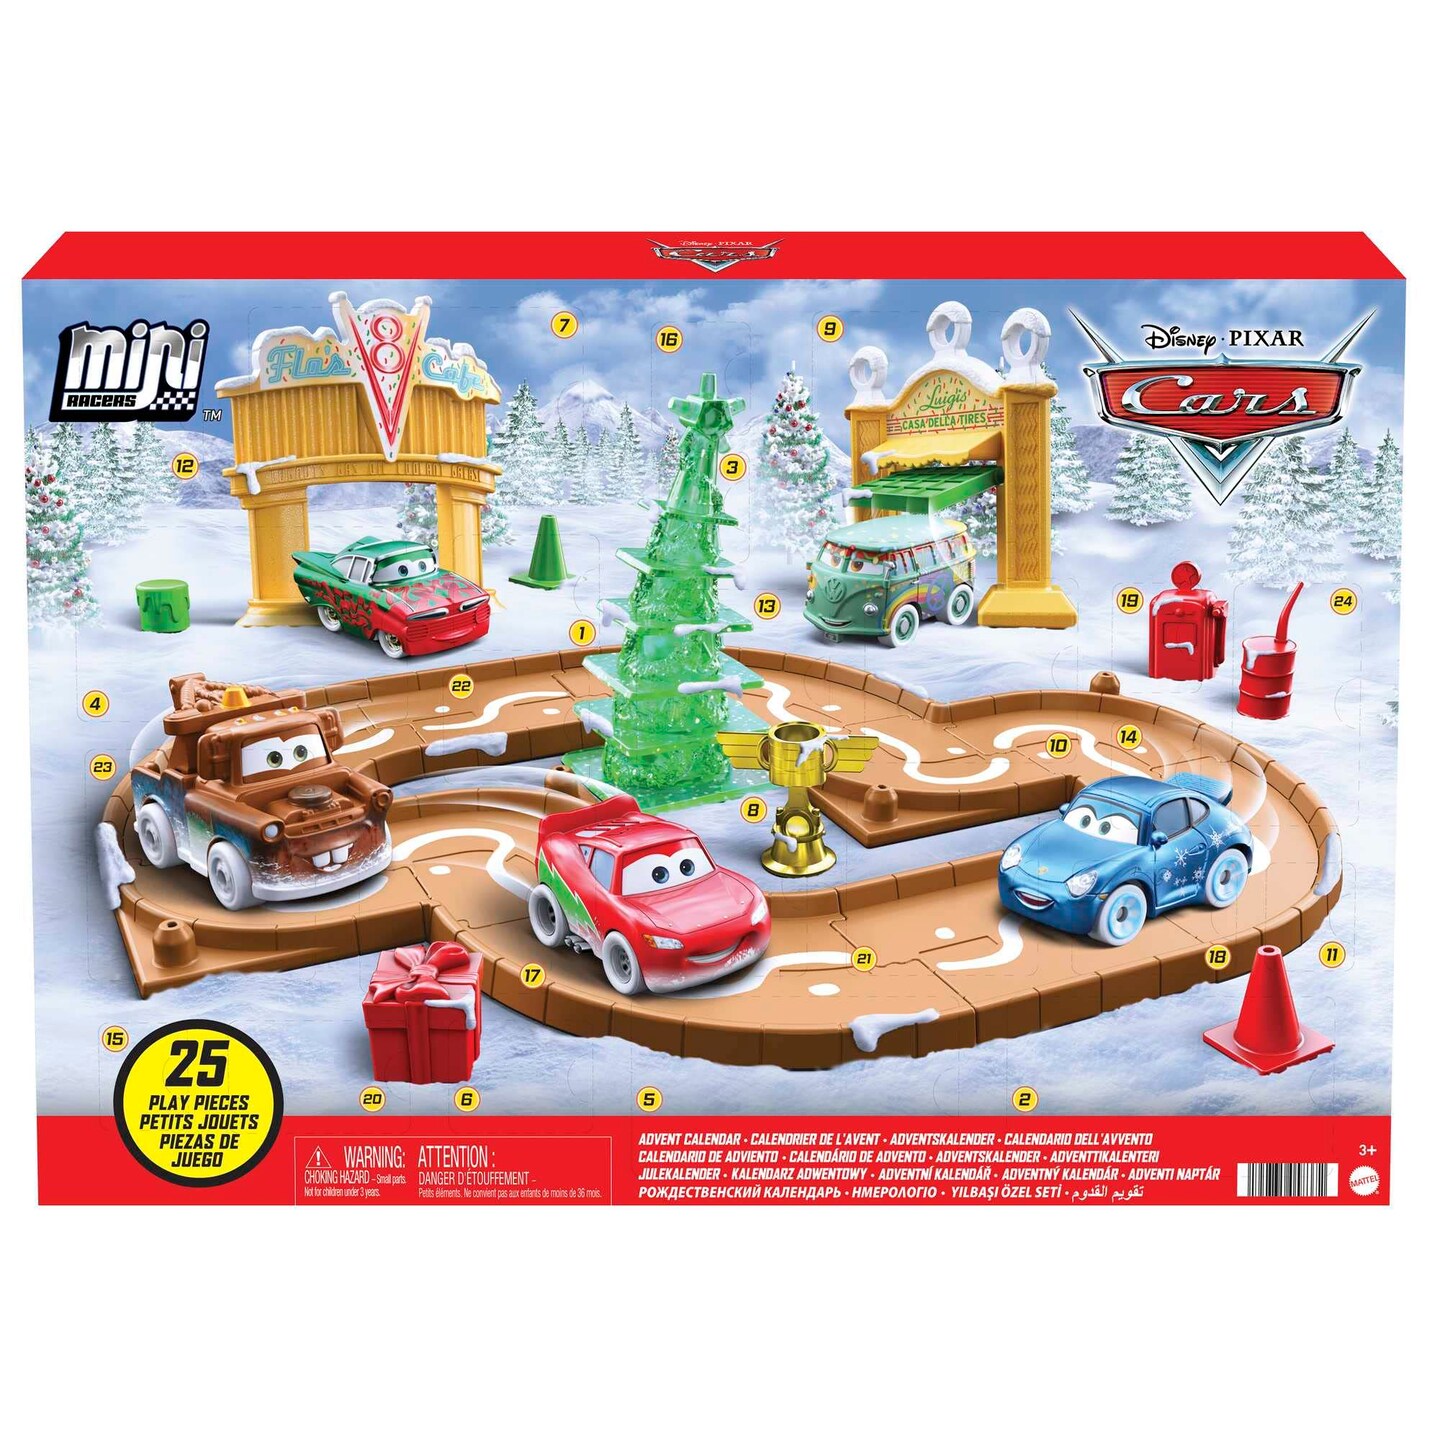 Mini Brands Disney Store Christmas Advent Calendar 24 Minis 3 Exclusiv – I  Love Characters